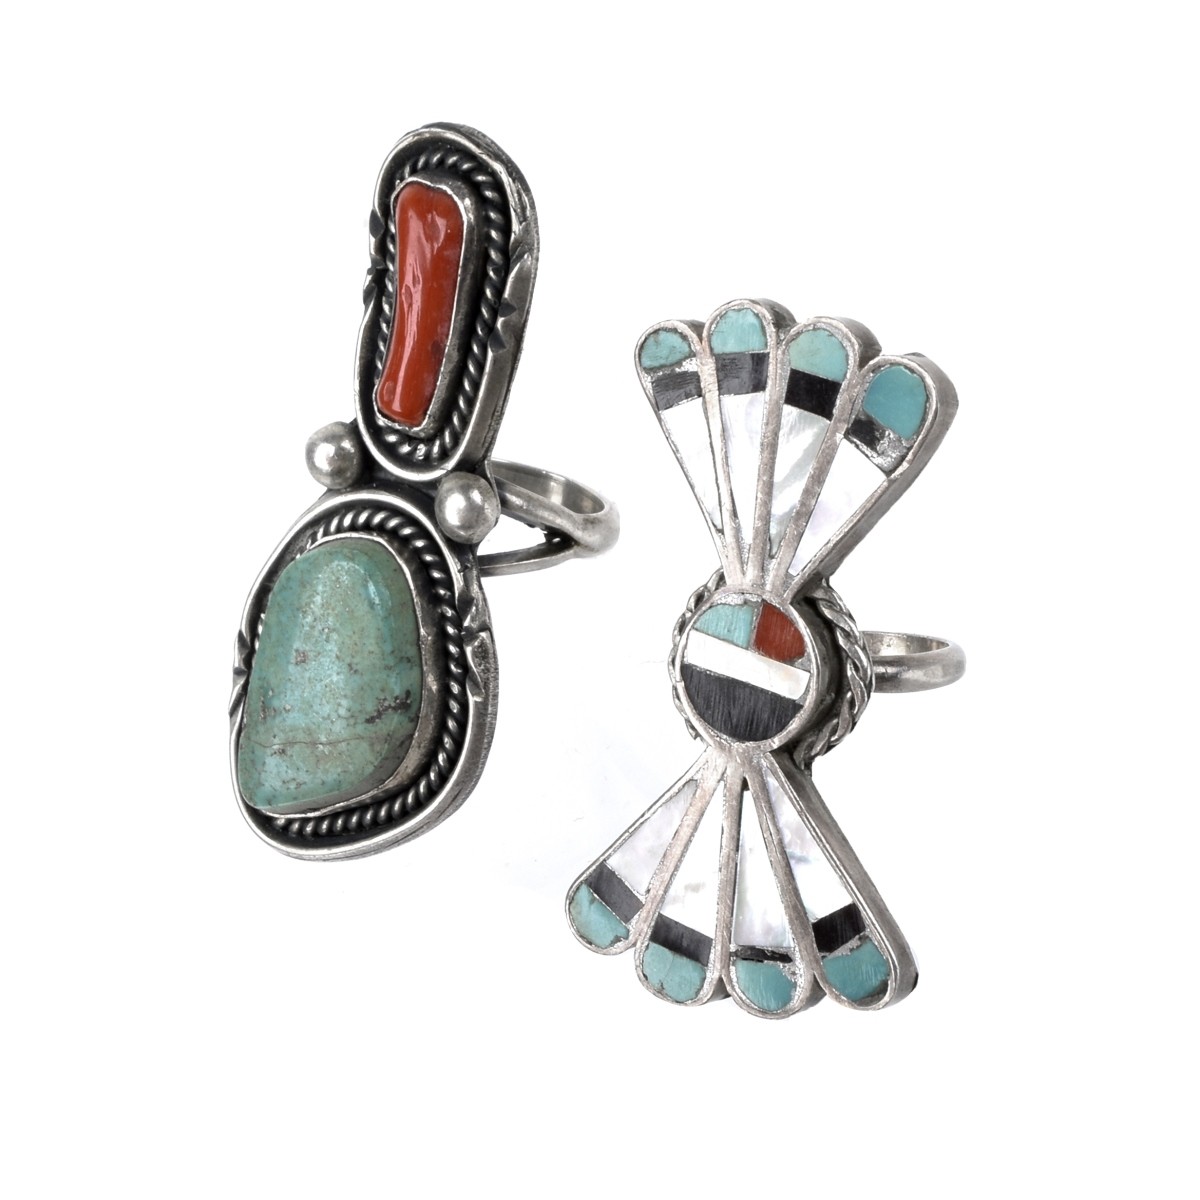 Two Vintage Native American Sterling Rings